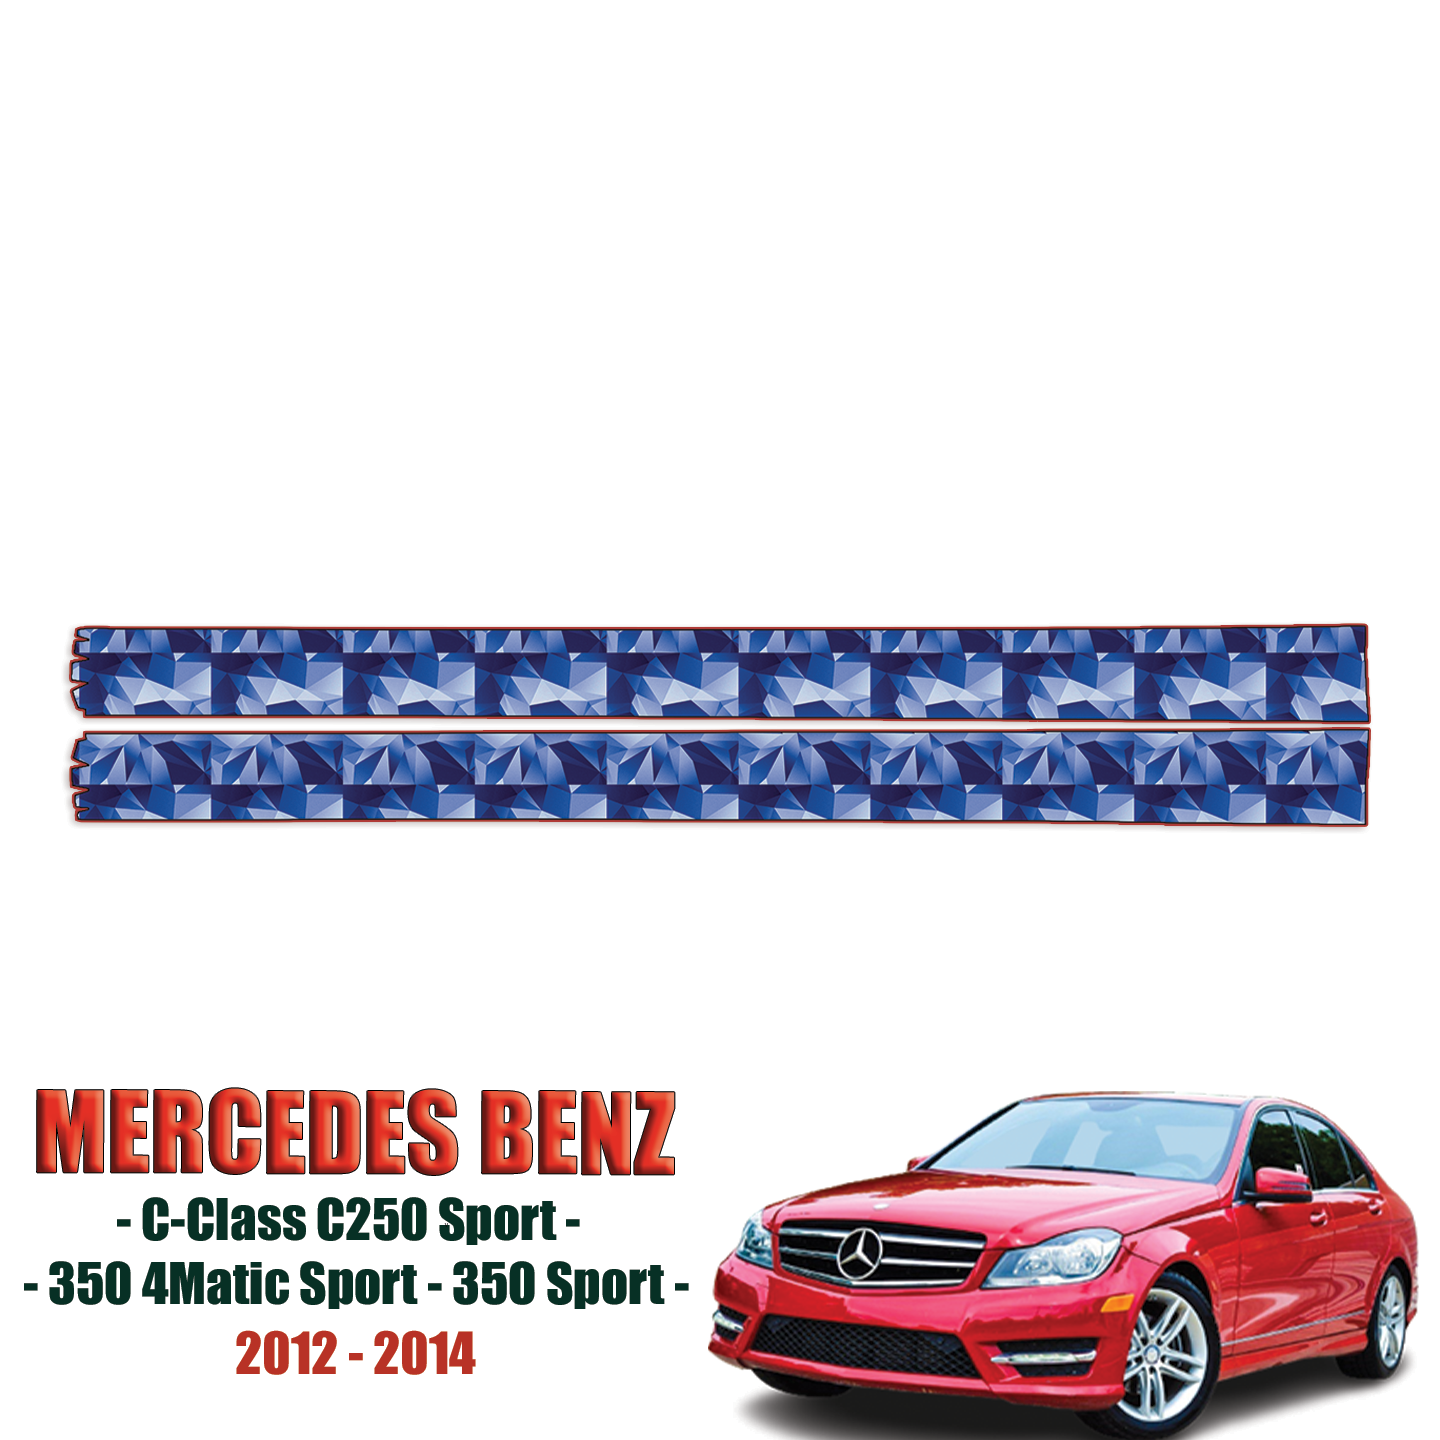 2012-2014 Mercedes Benz C-Class, C250 Sport, 300 4matic Sport, 350 Sport Precut Paint Protection Kit – Rocker Panels